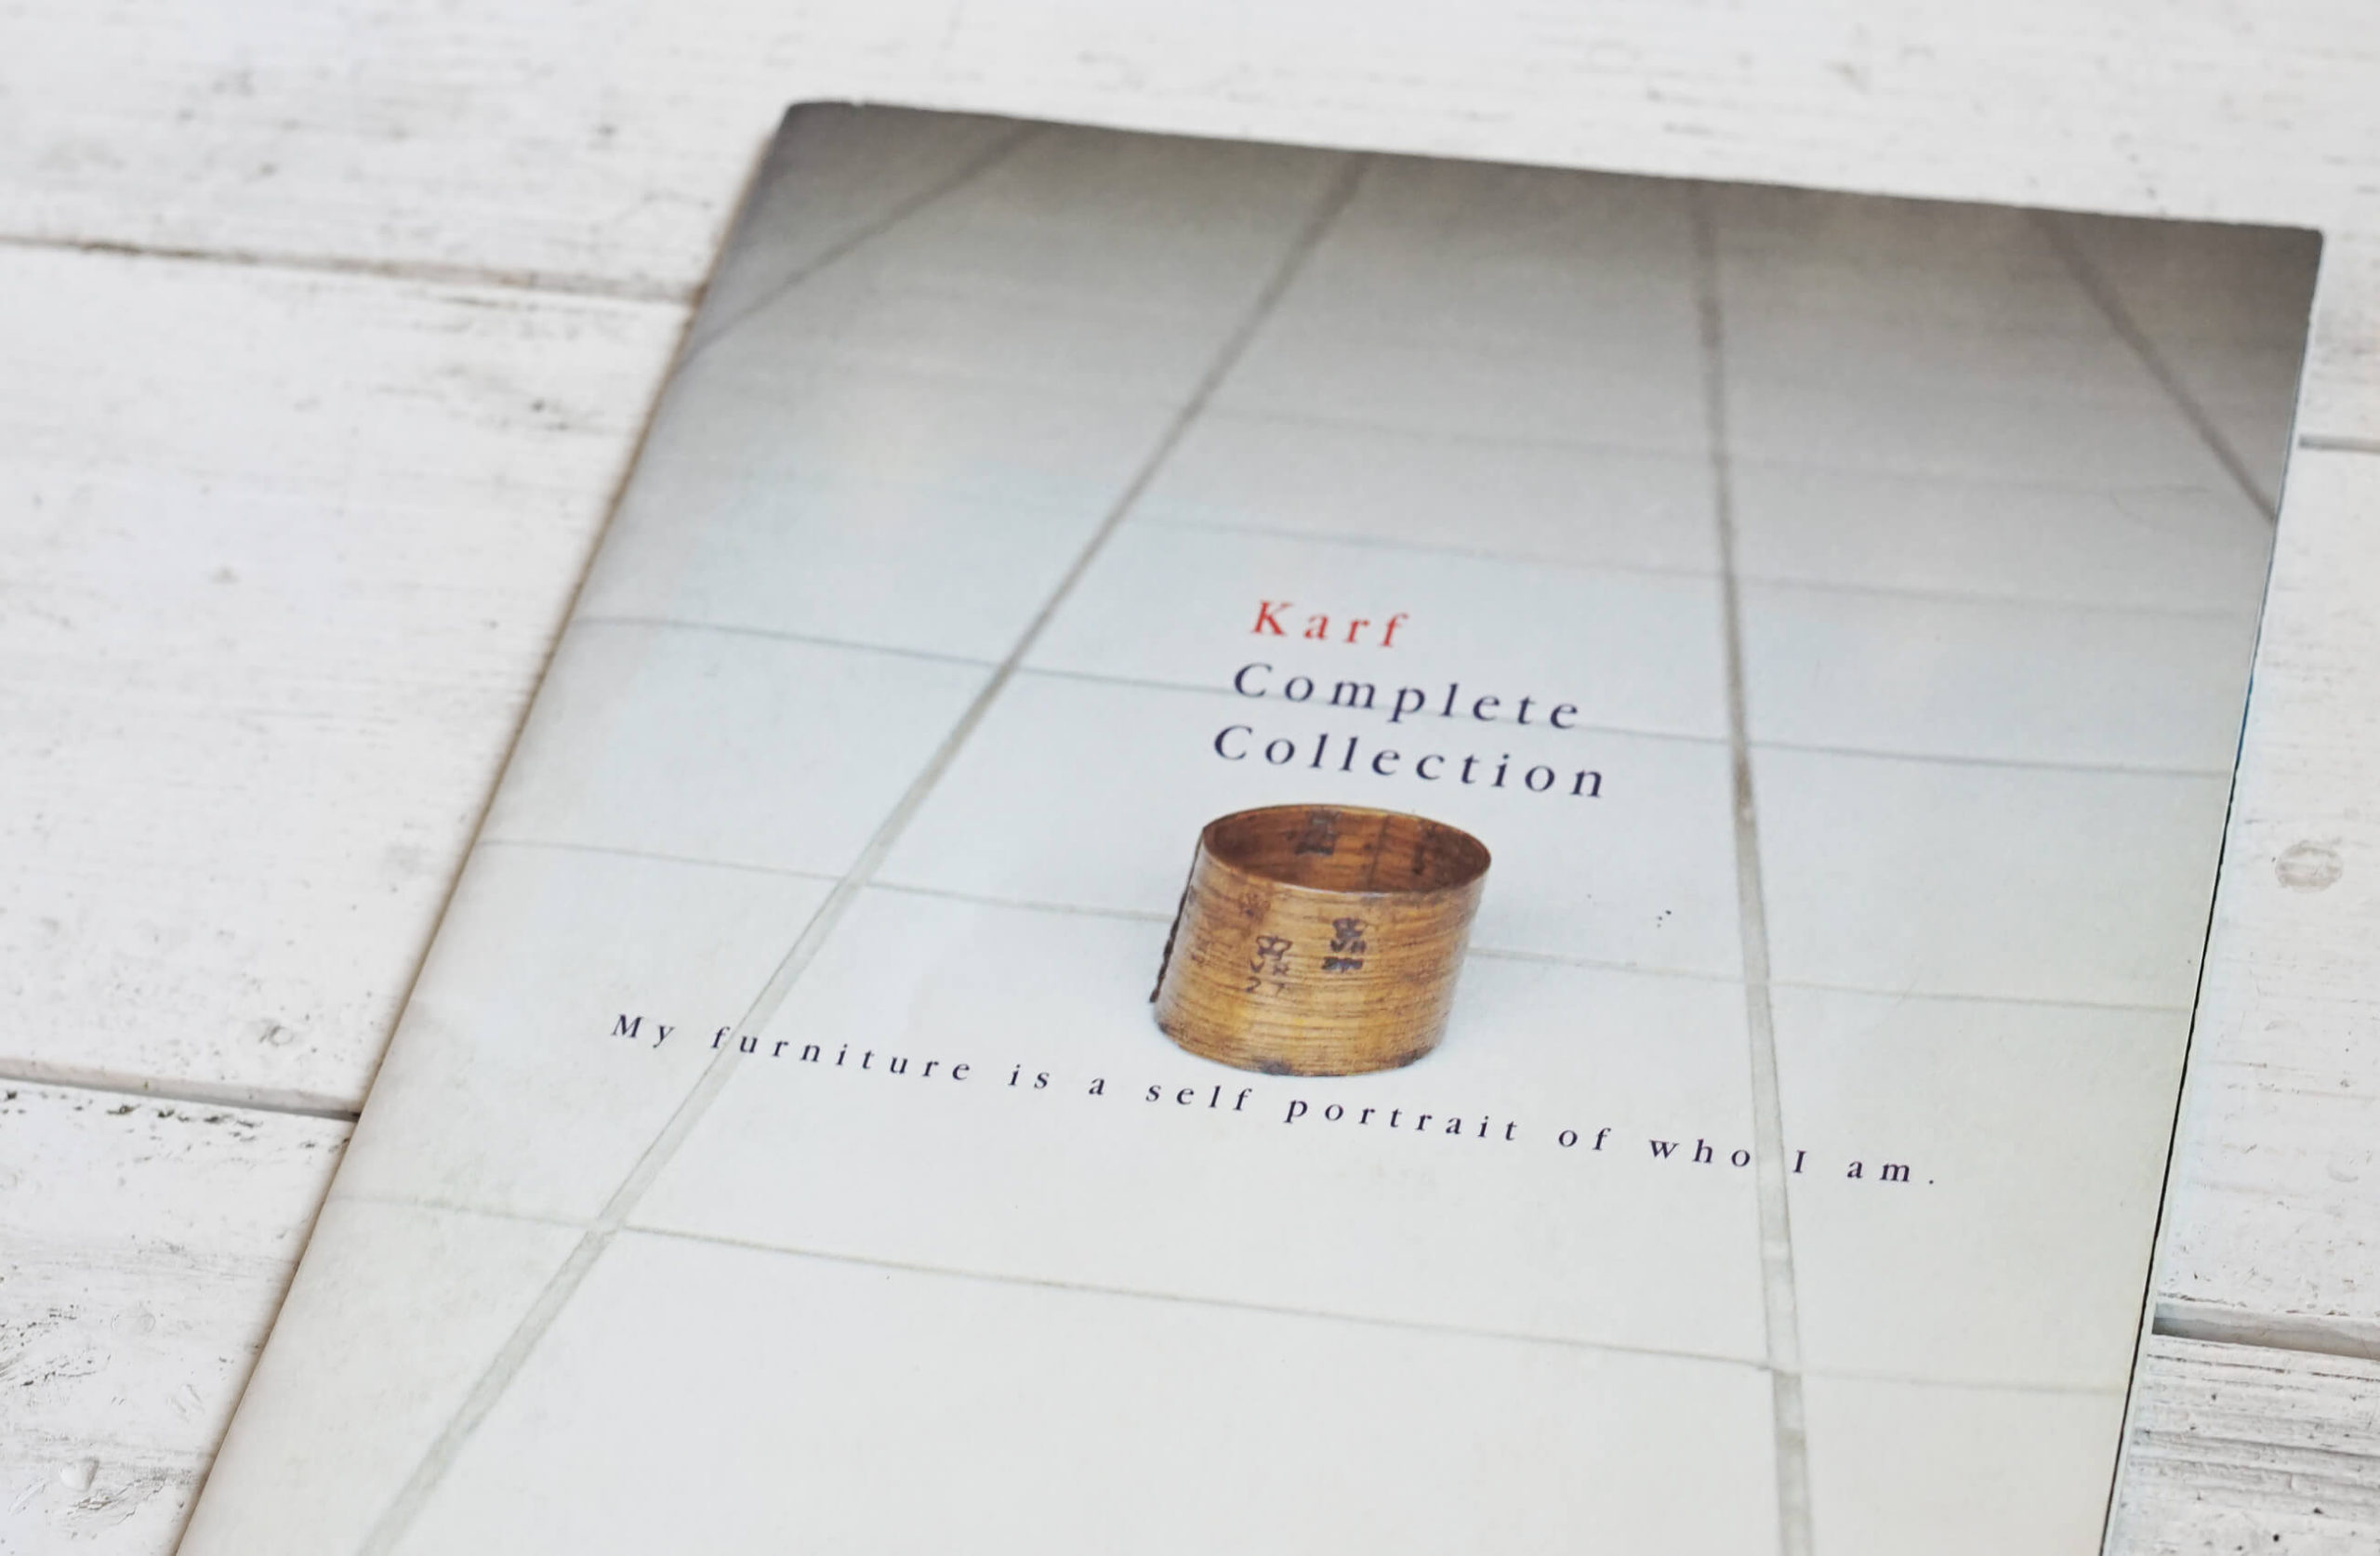 karf-Complate-Collection2-2